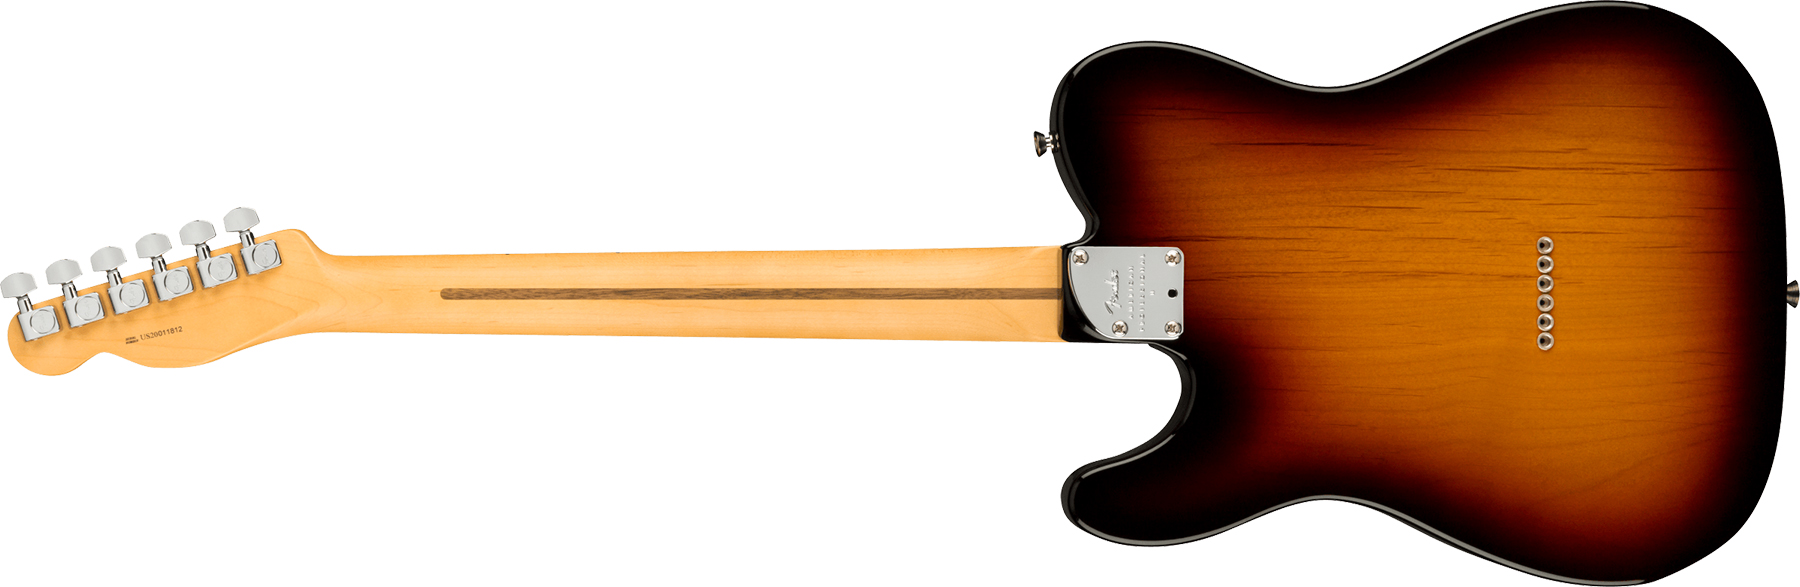 Fender Tele American Professional Ii Usa Rw - 3-color Sunburst - Tel shape electric guitar - Variation 1